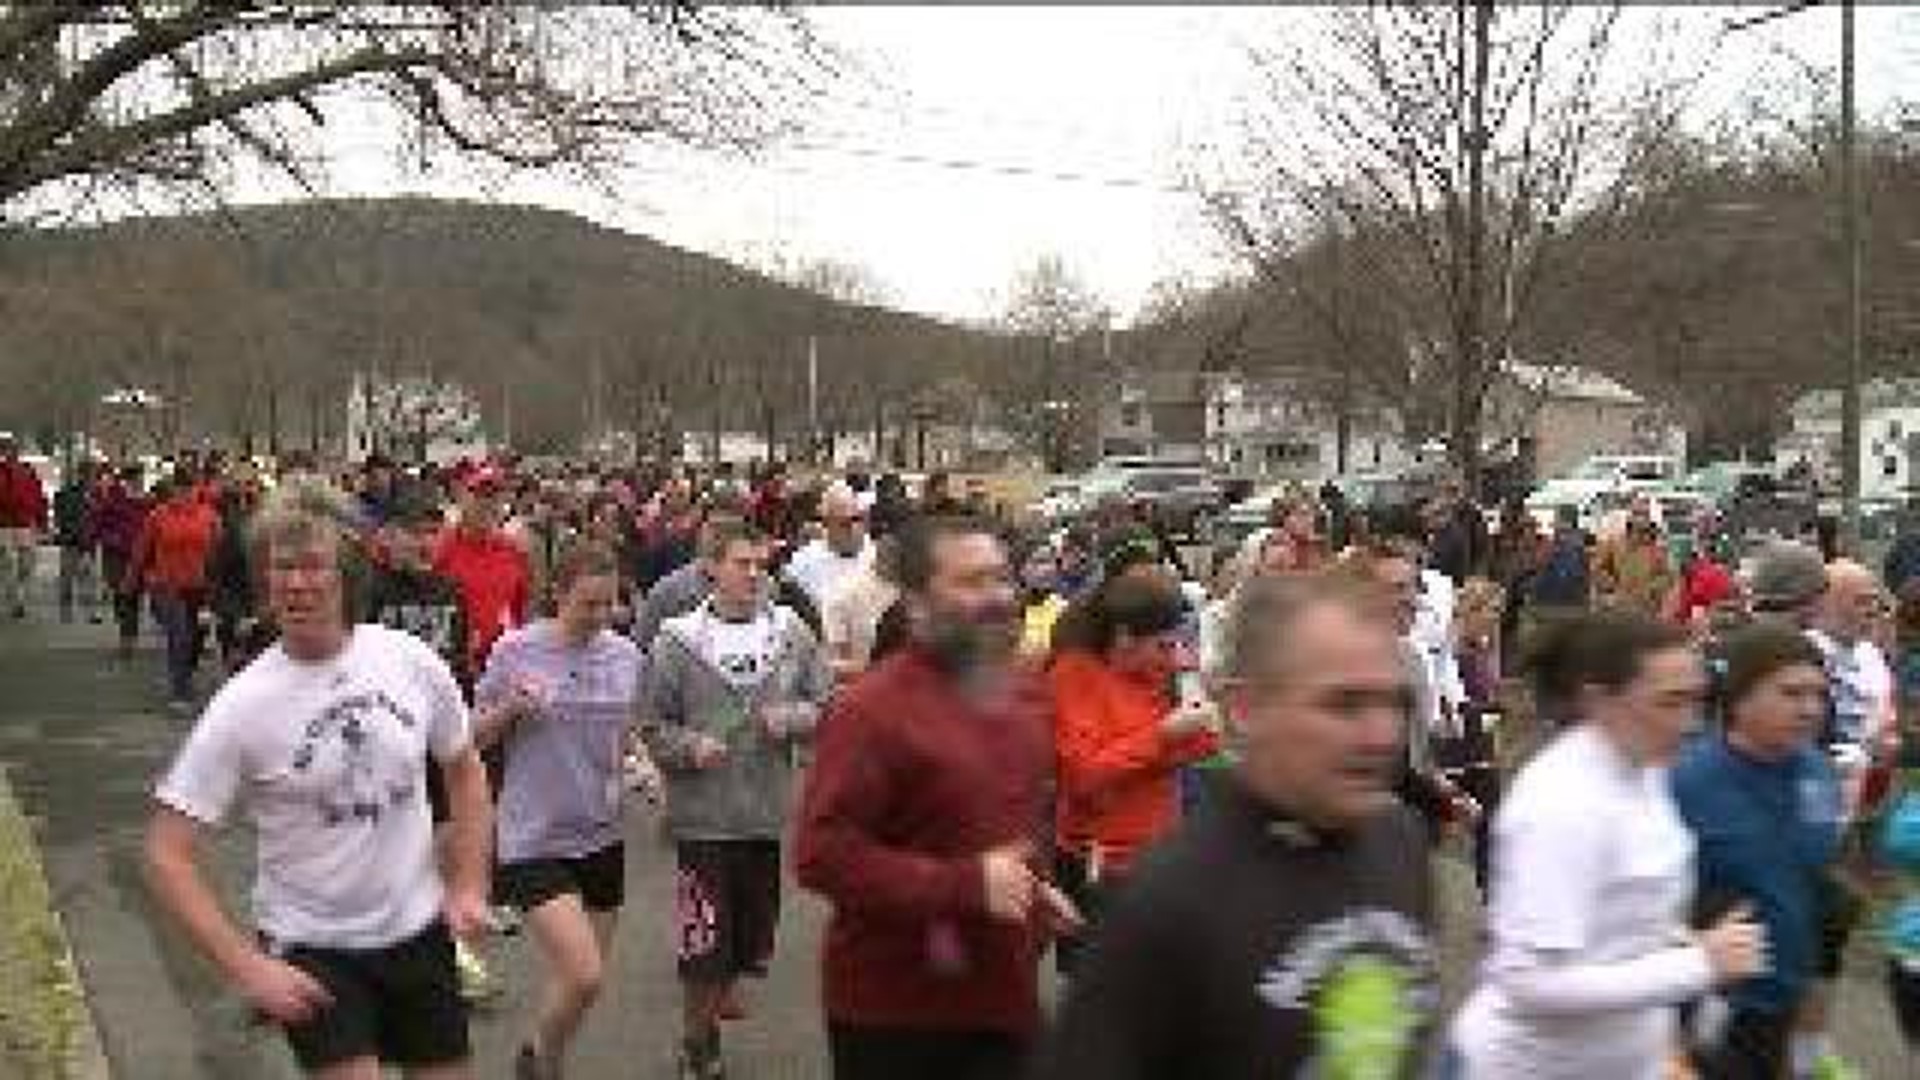 Runners Participate in 5k to Benefit Susquehanna Warrior Trail